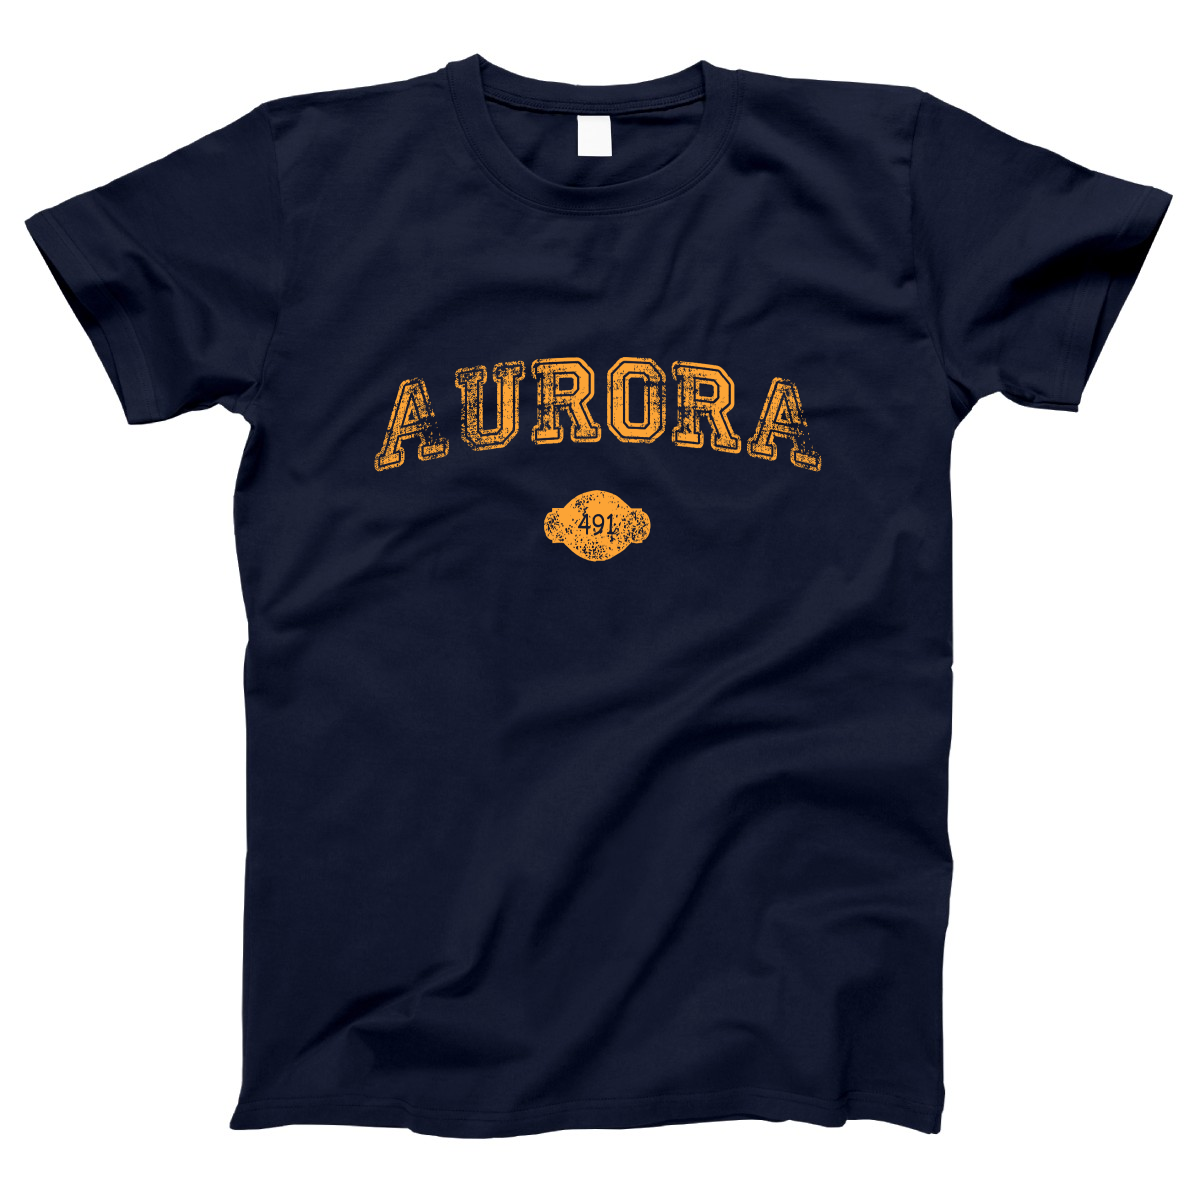 Aurora 1891 Represent Women's T-shirt | Navy